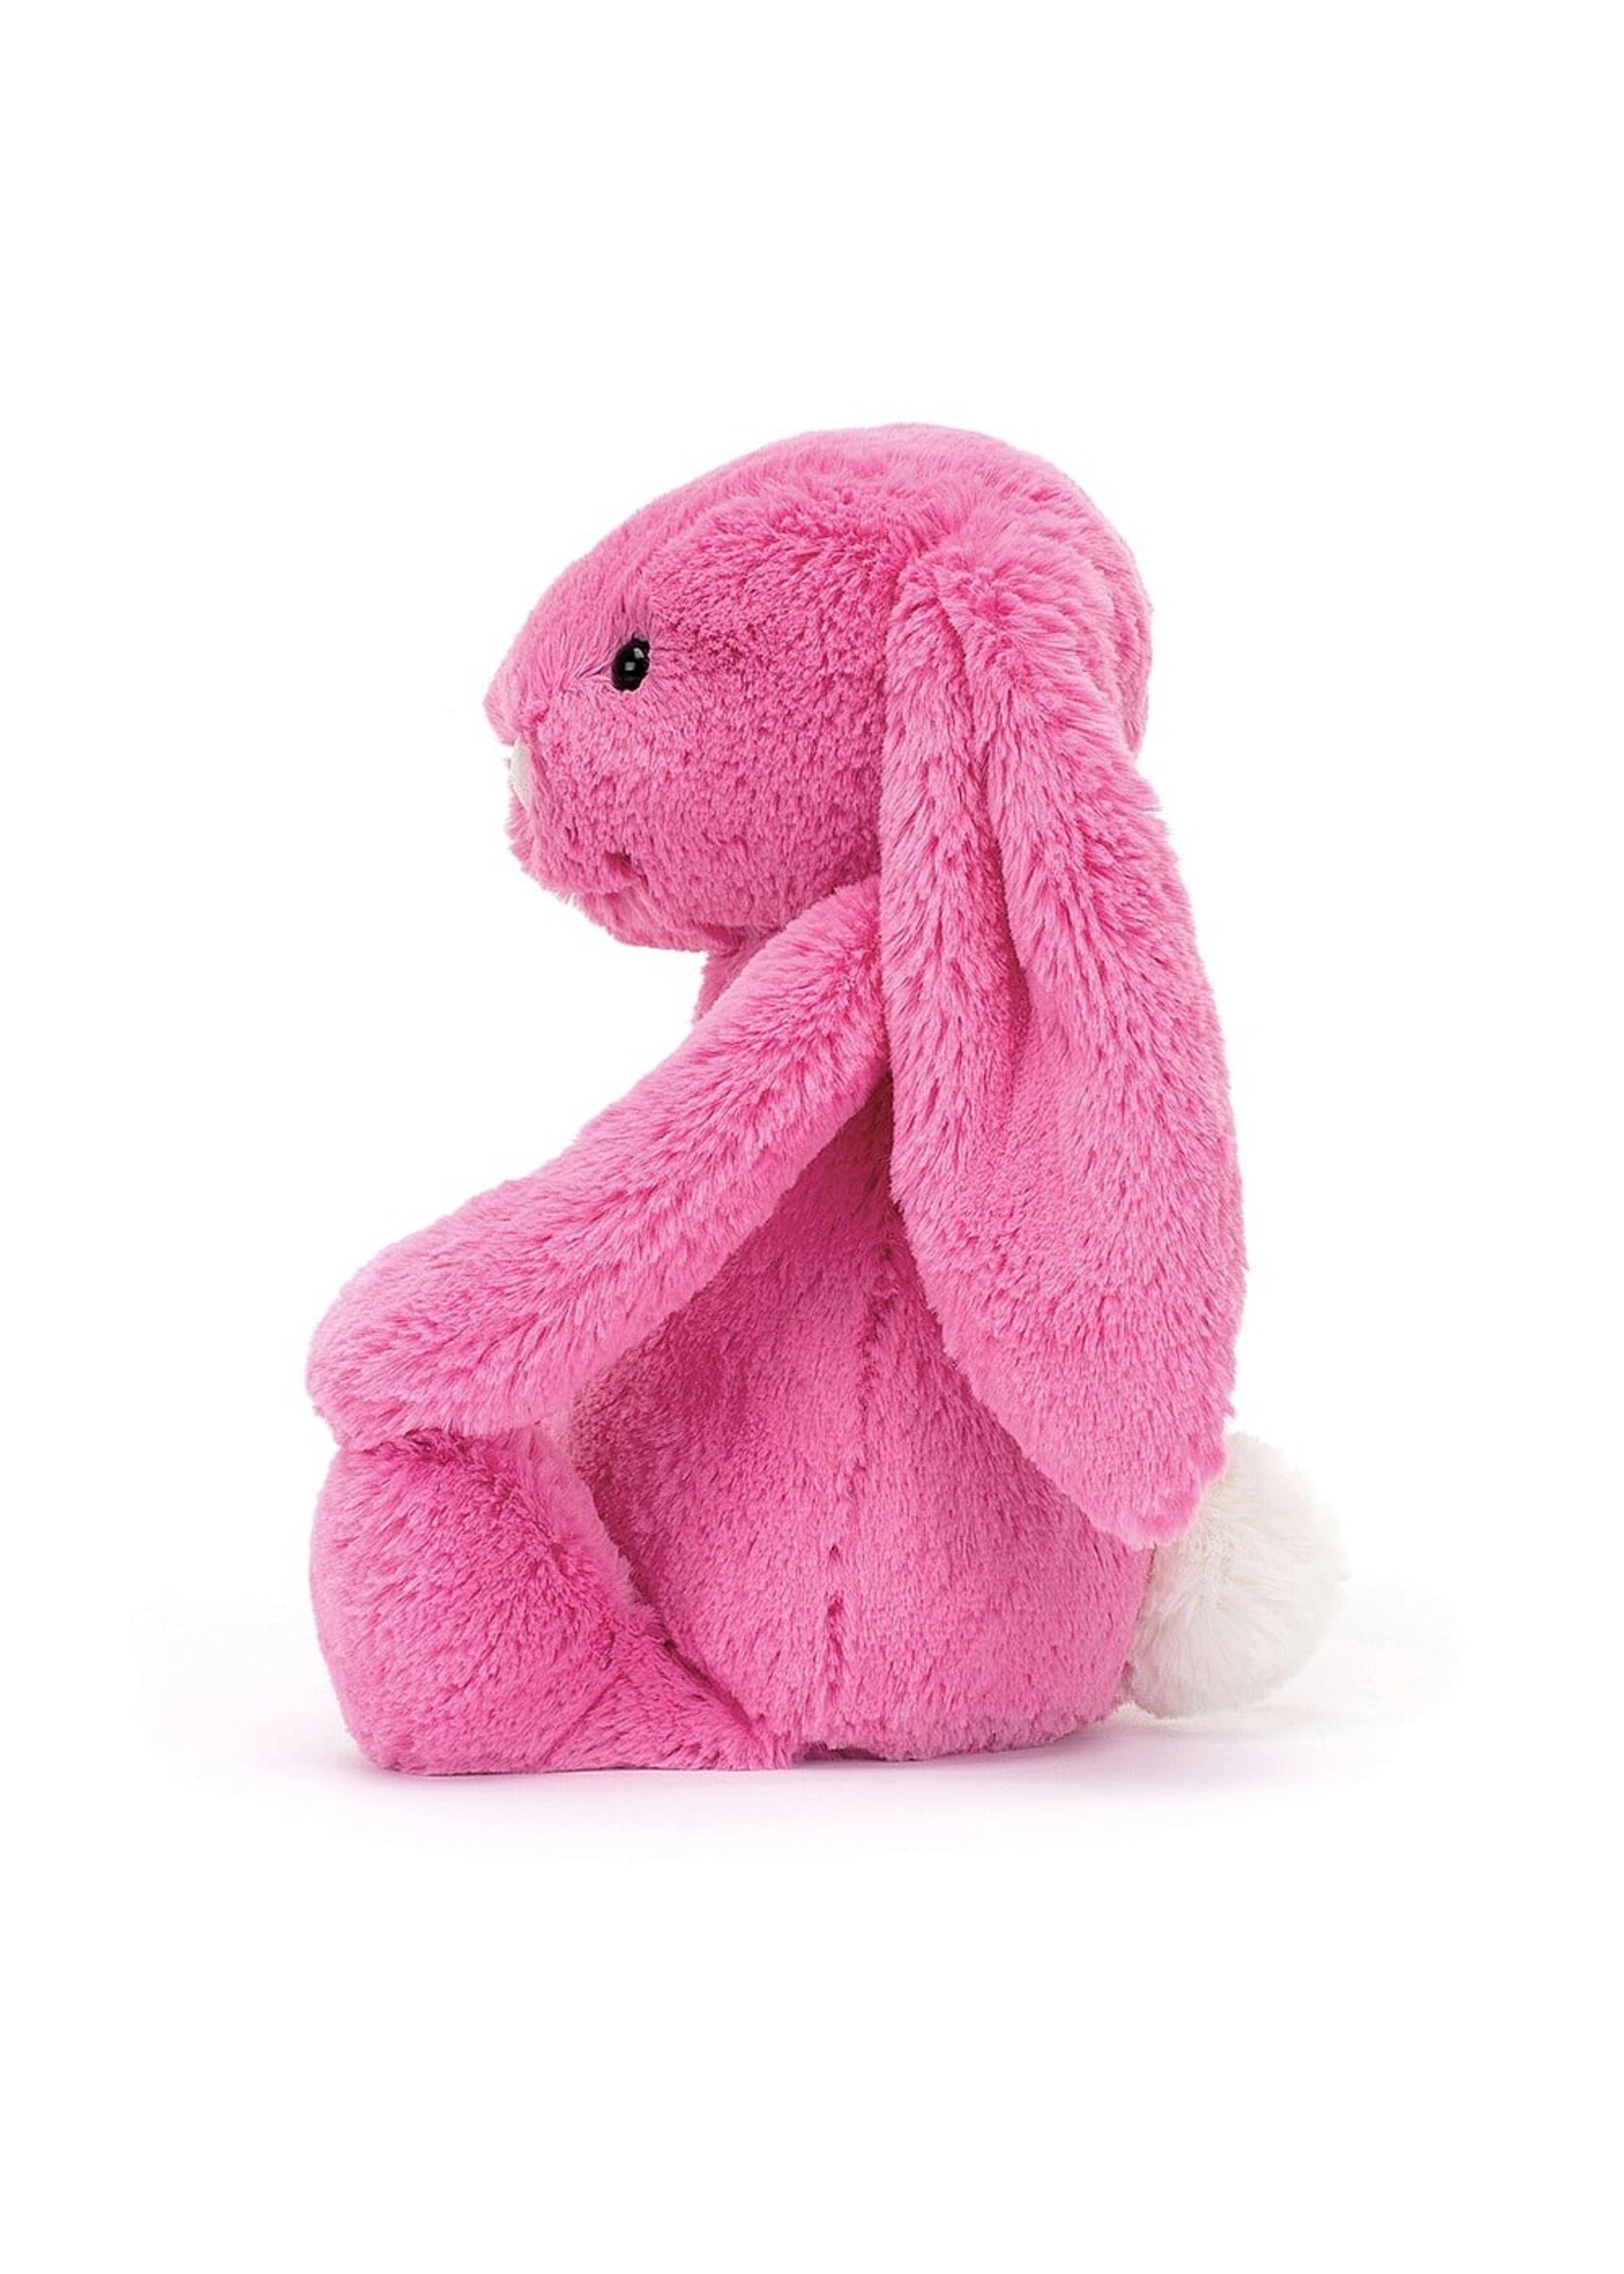 Jellycat Bashful Hot Pink Bunny - Medium